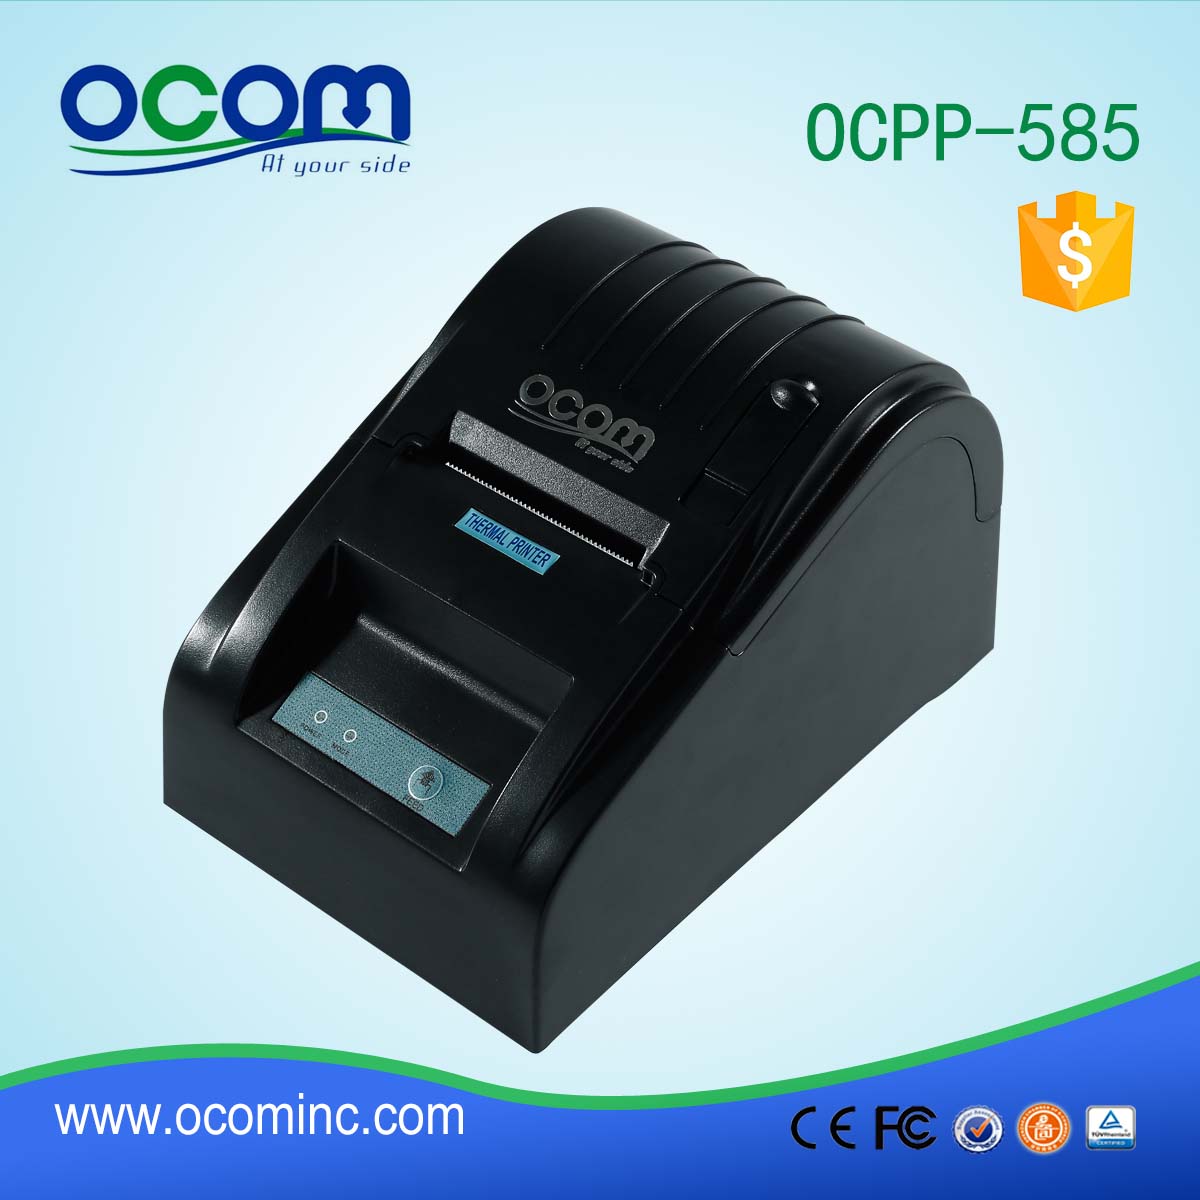 Impresora térmica de escritorio usb androide OCPP-585